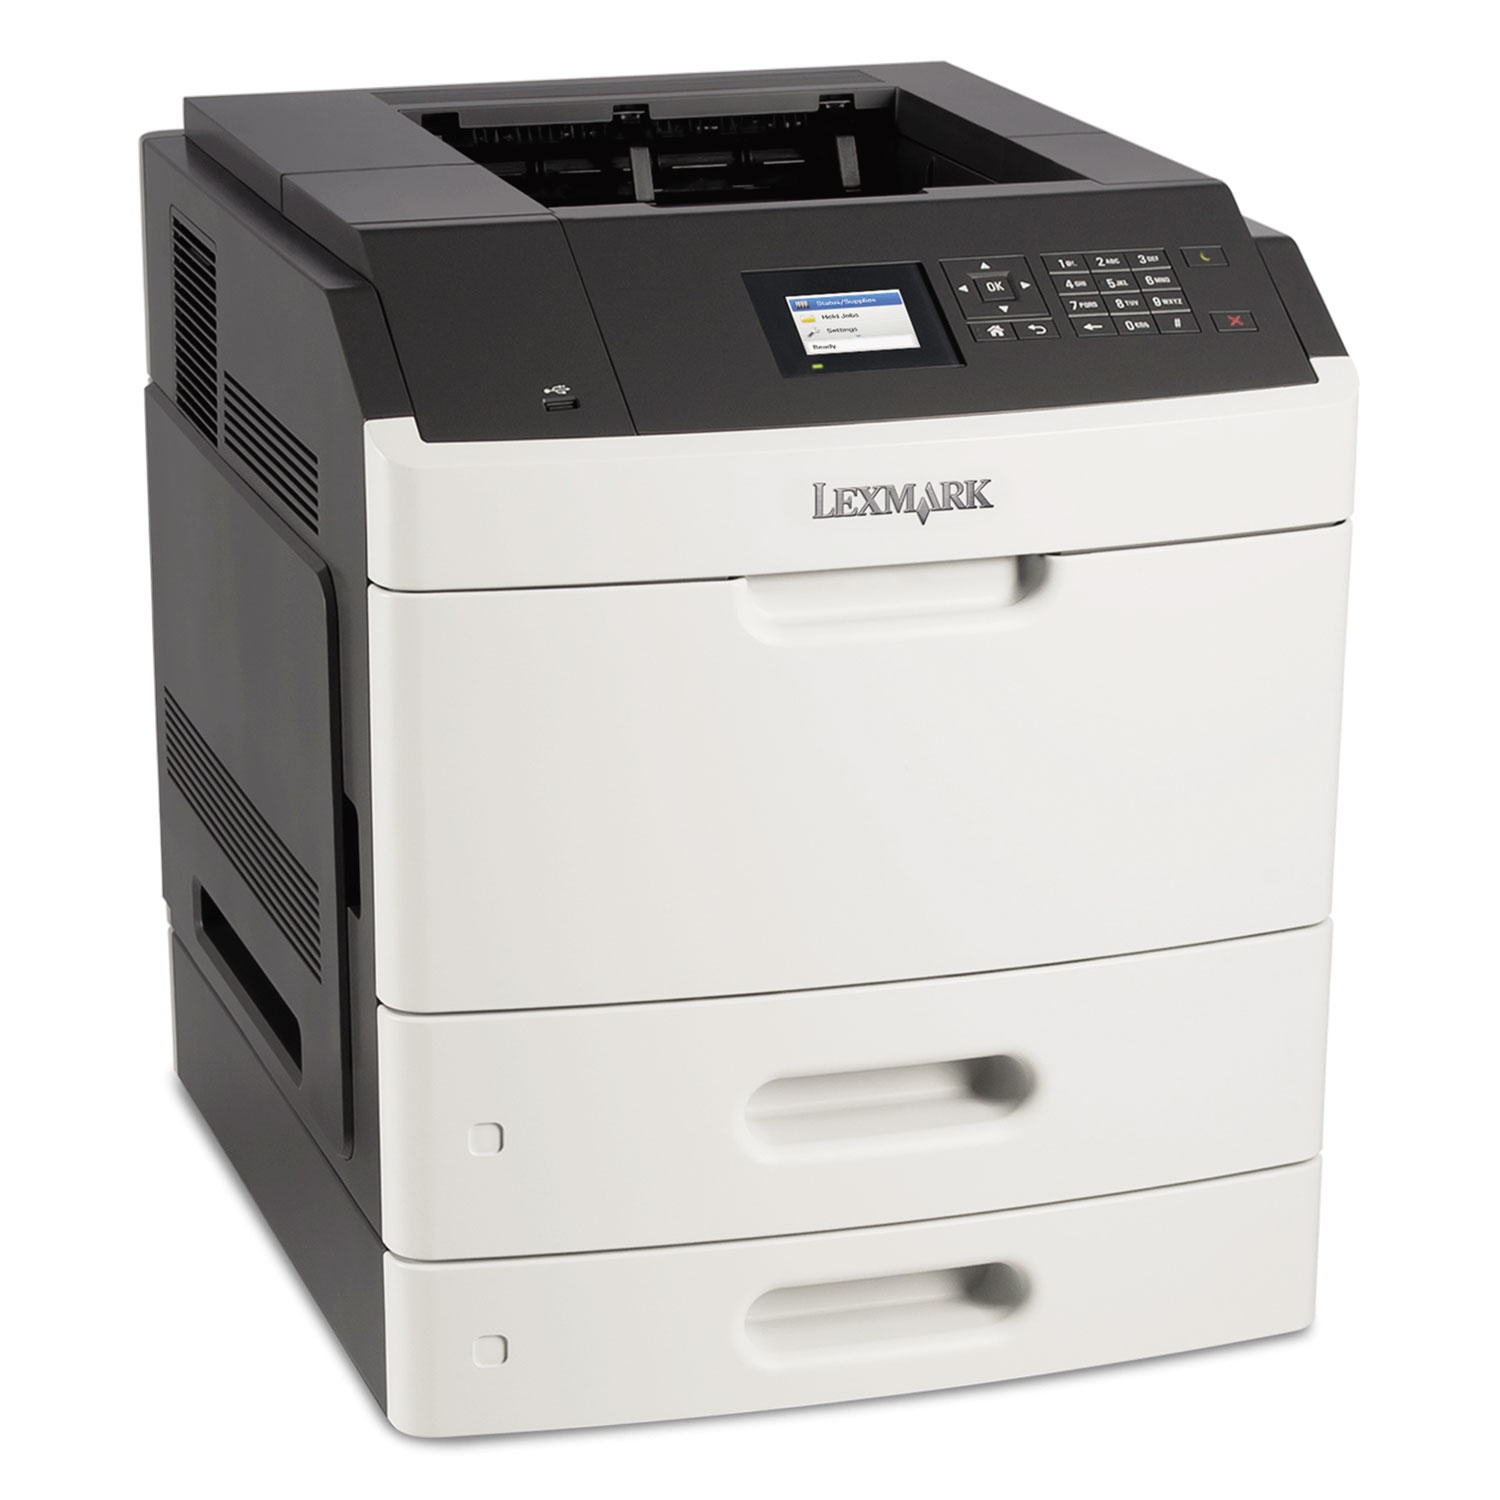 MS811dtn Laser Printer